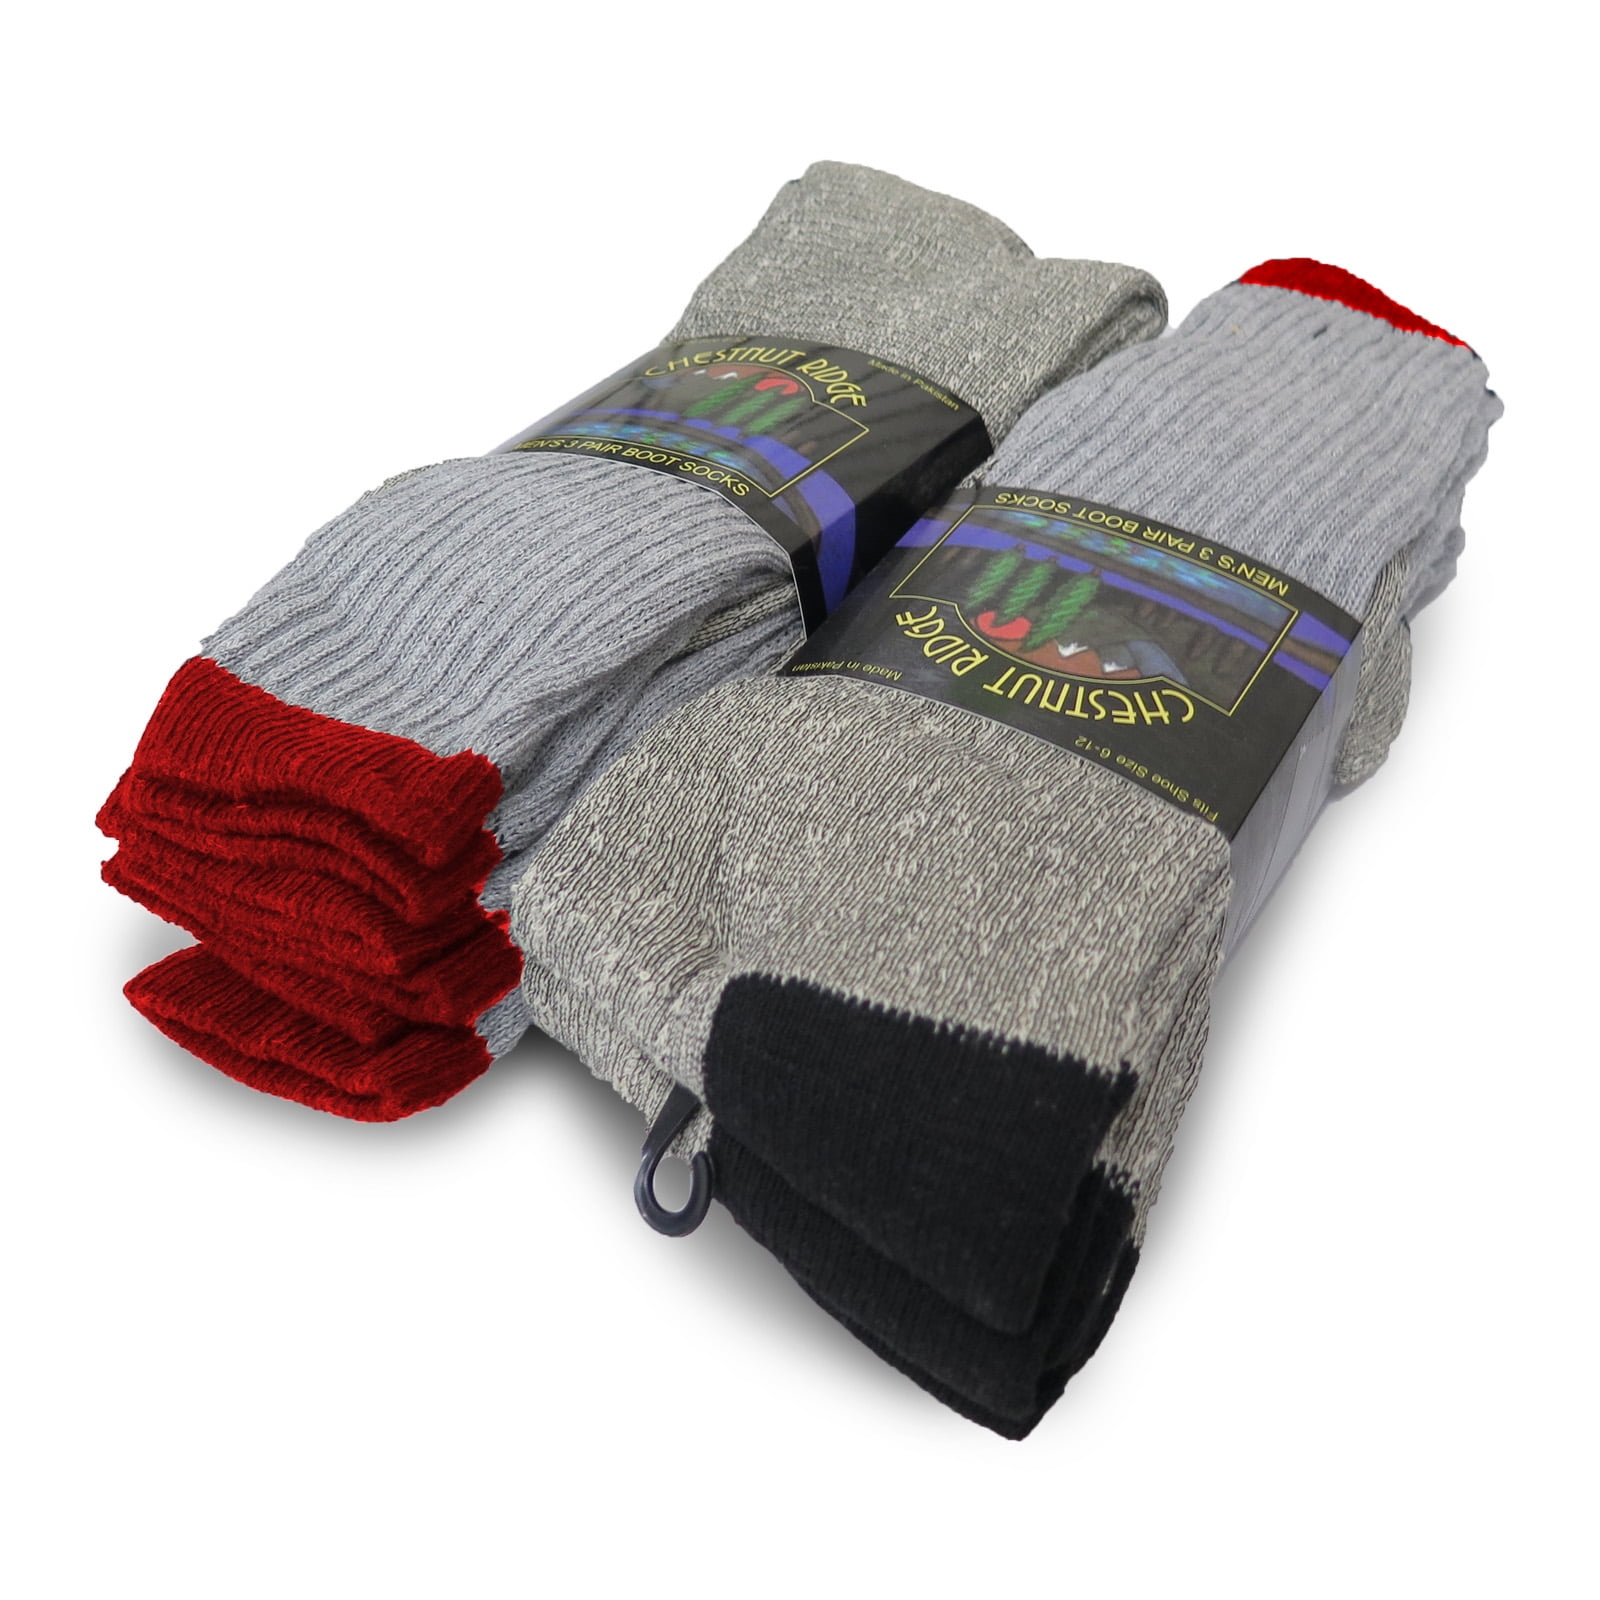 Winter Wool Men Socks Thicken Heavy Duty Warm Thermal Soft Mid-calf Hiking Boot